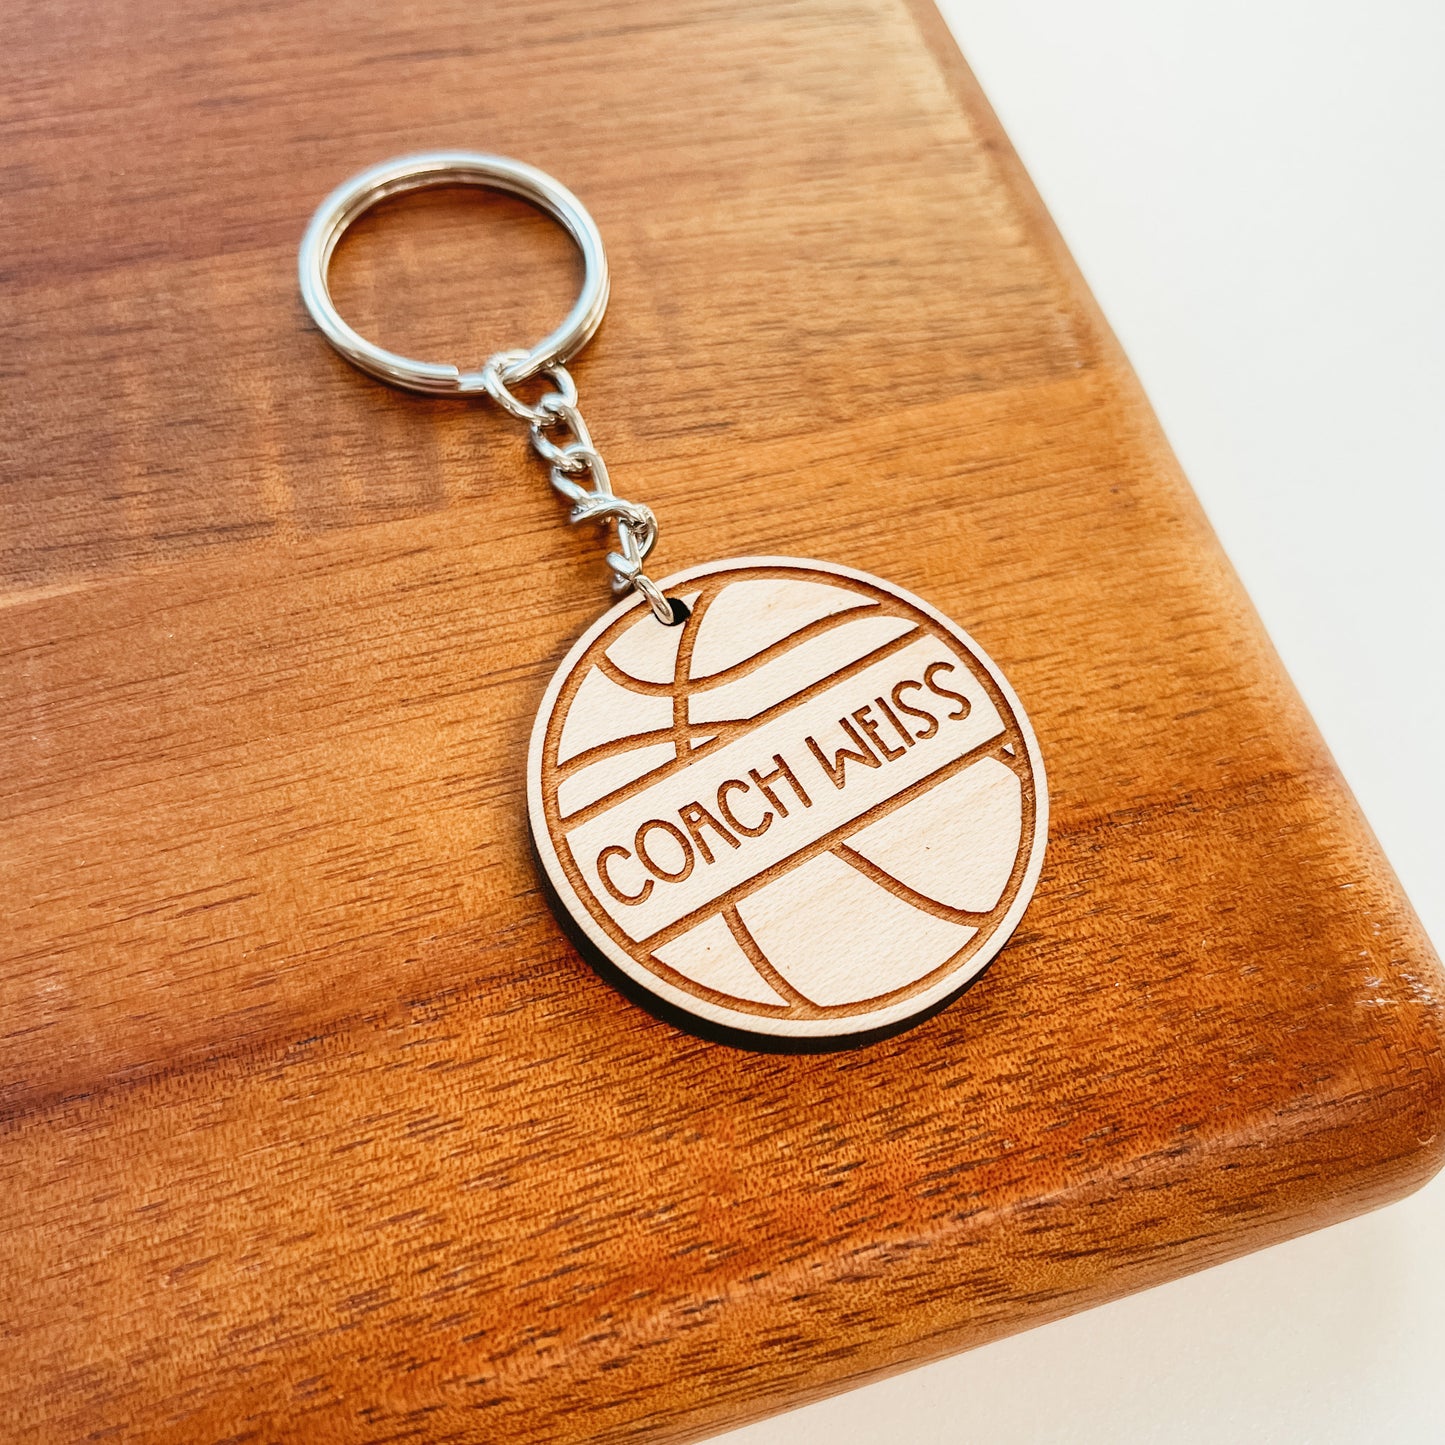 Personalized Basketball Keychain